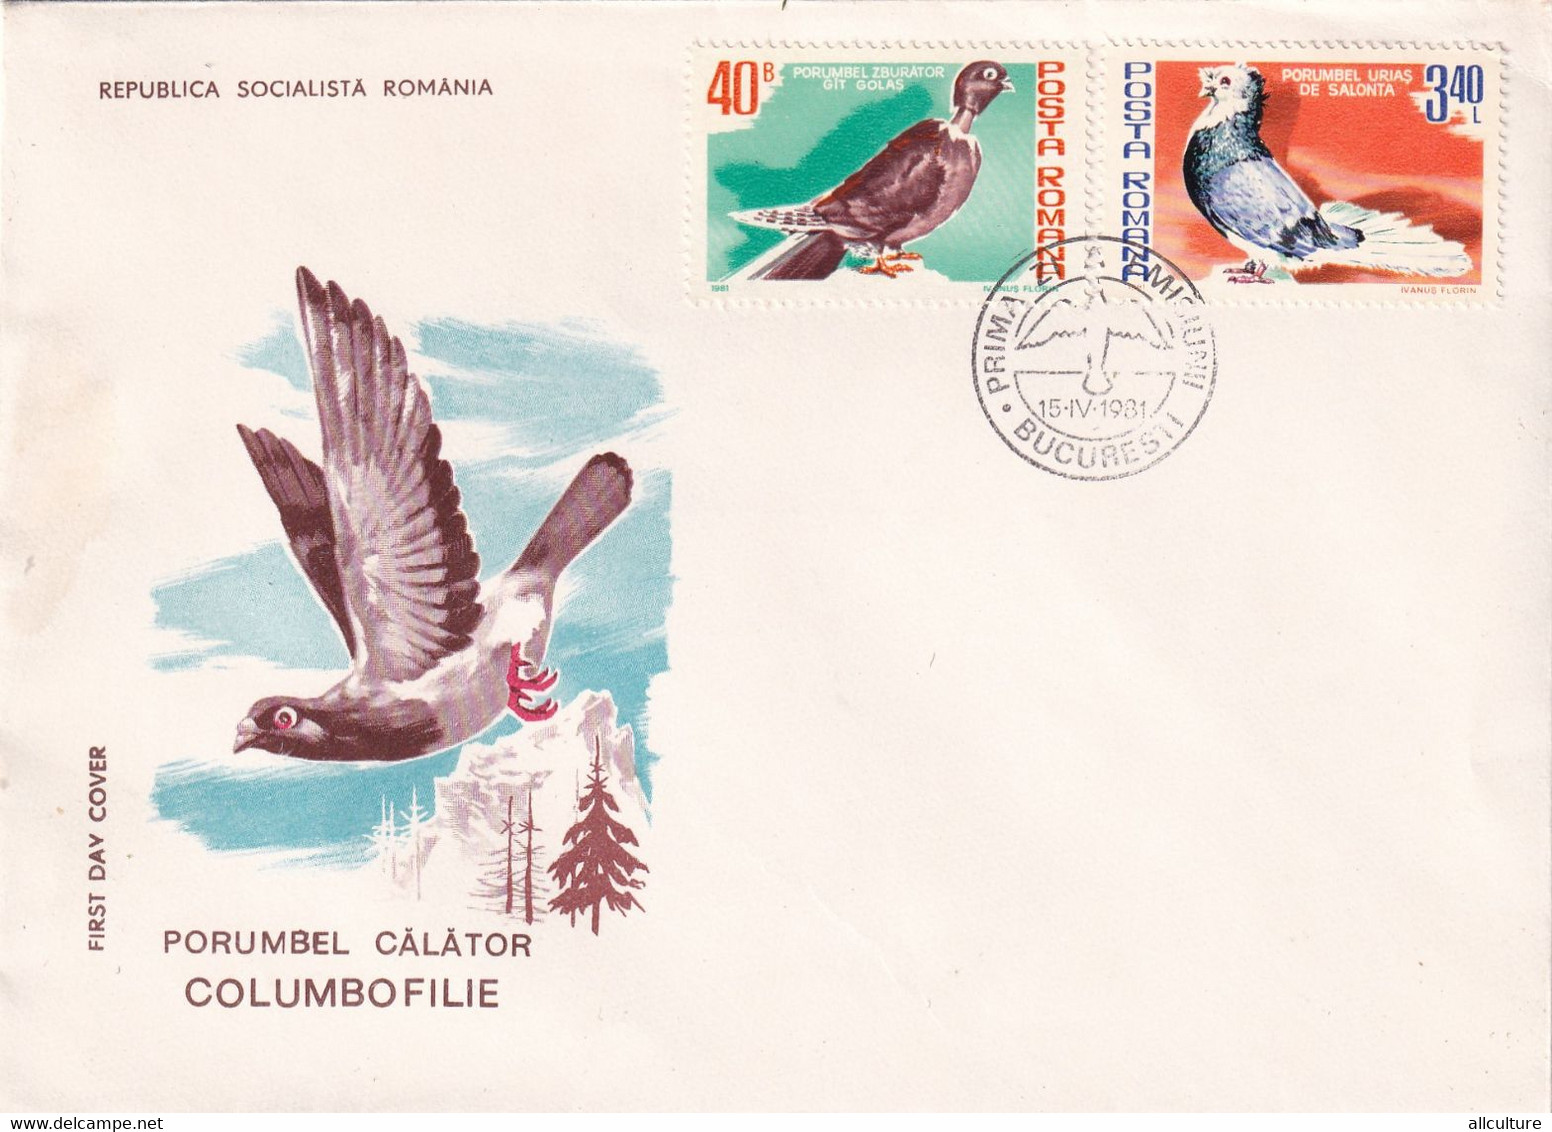 A2921- Columbiformes, Pigeon Birds, Republica Socialista Romania, Bucuresti 1981  3 Covers FDC - Tauben & Flughühner